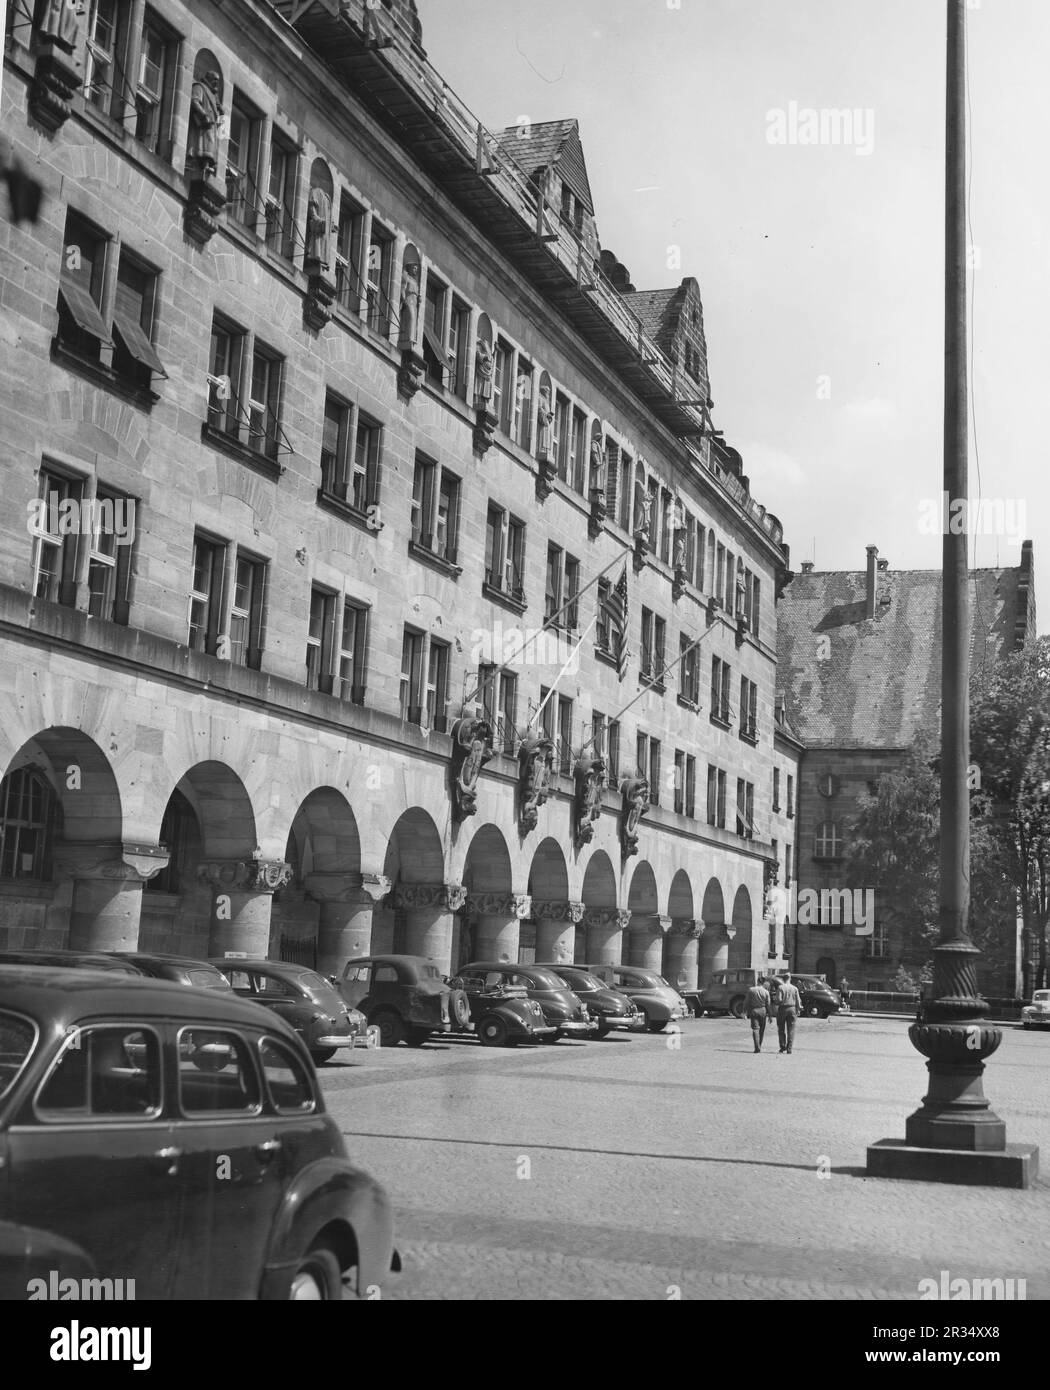 Das berühmte Gericht in Nürnberg, wo 1945 der Prozess gegen Nazi-Kriegsverbrecher stattfand. Stockfoto